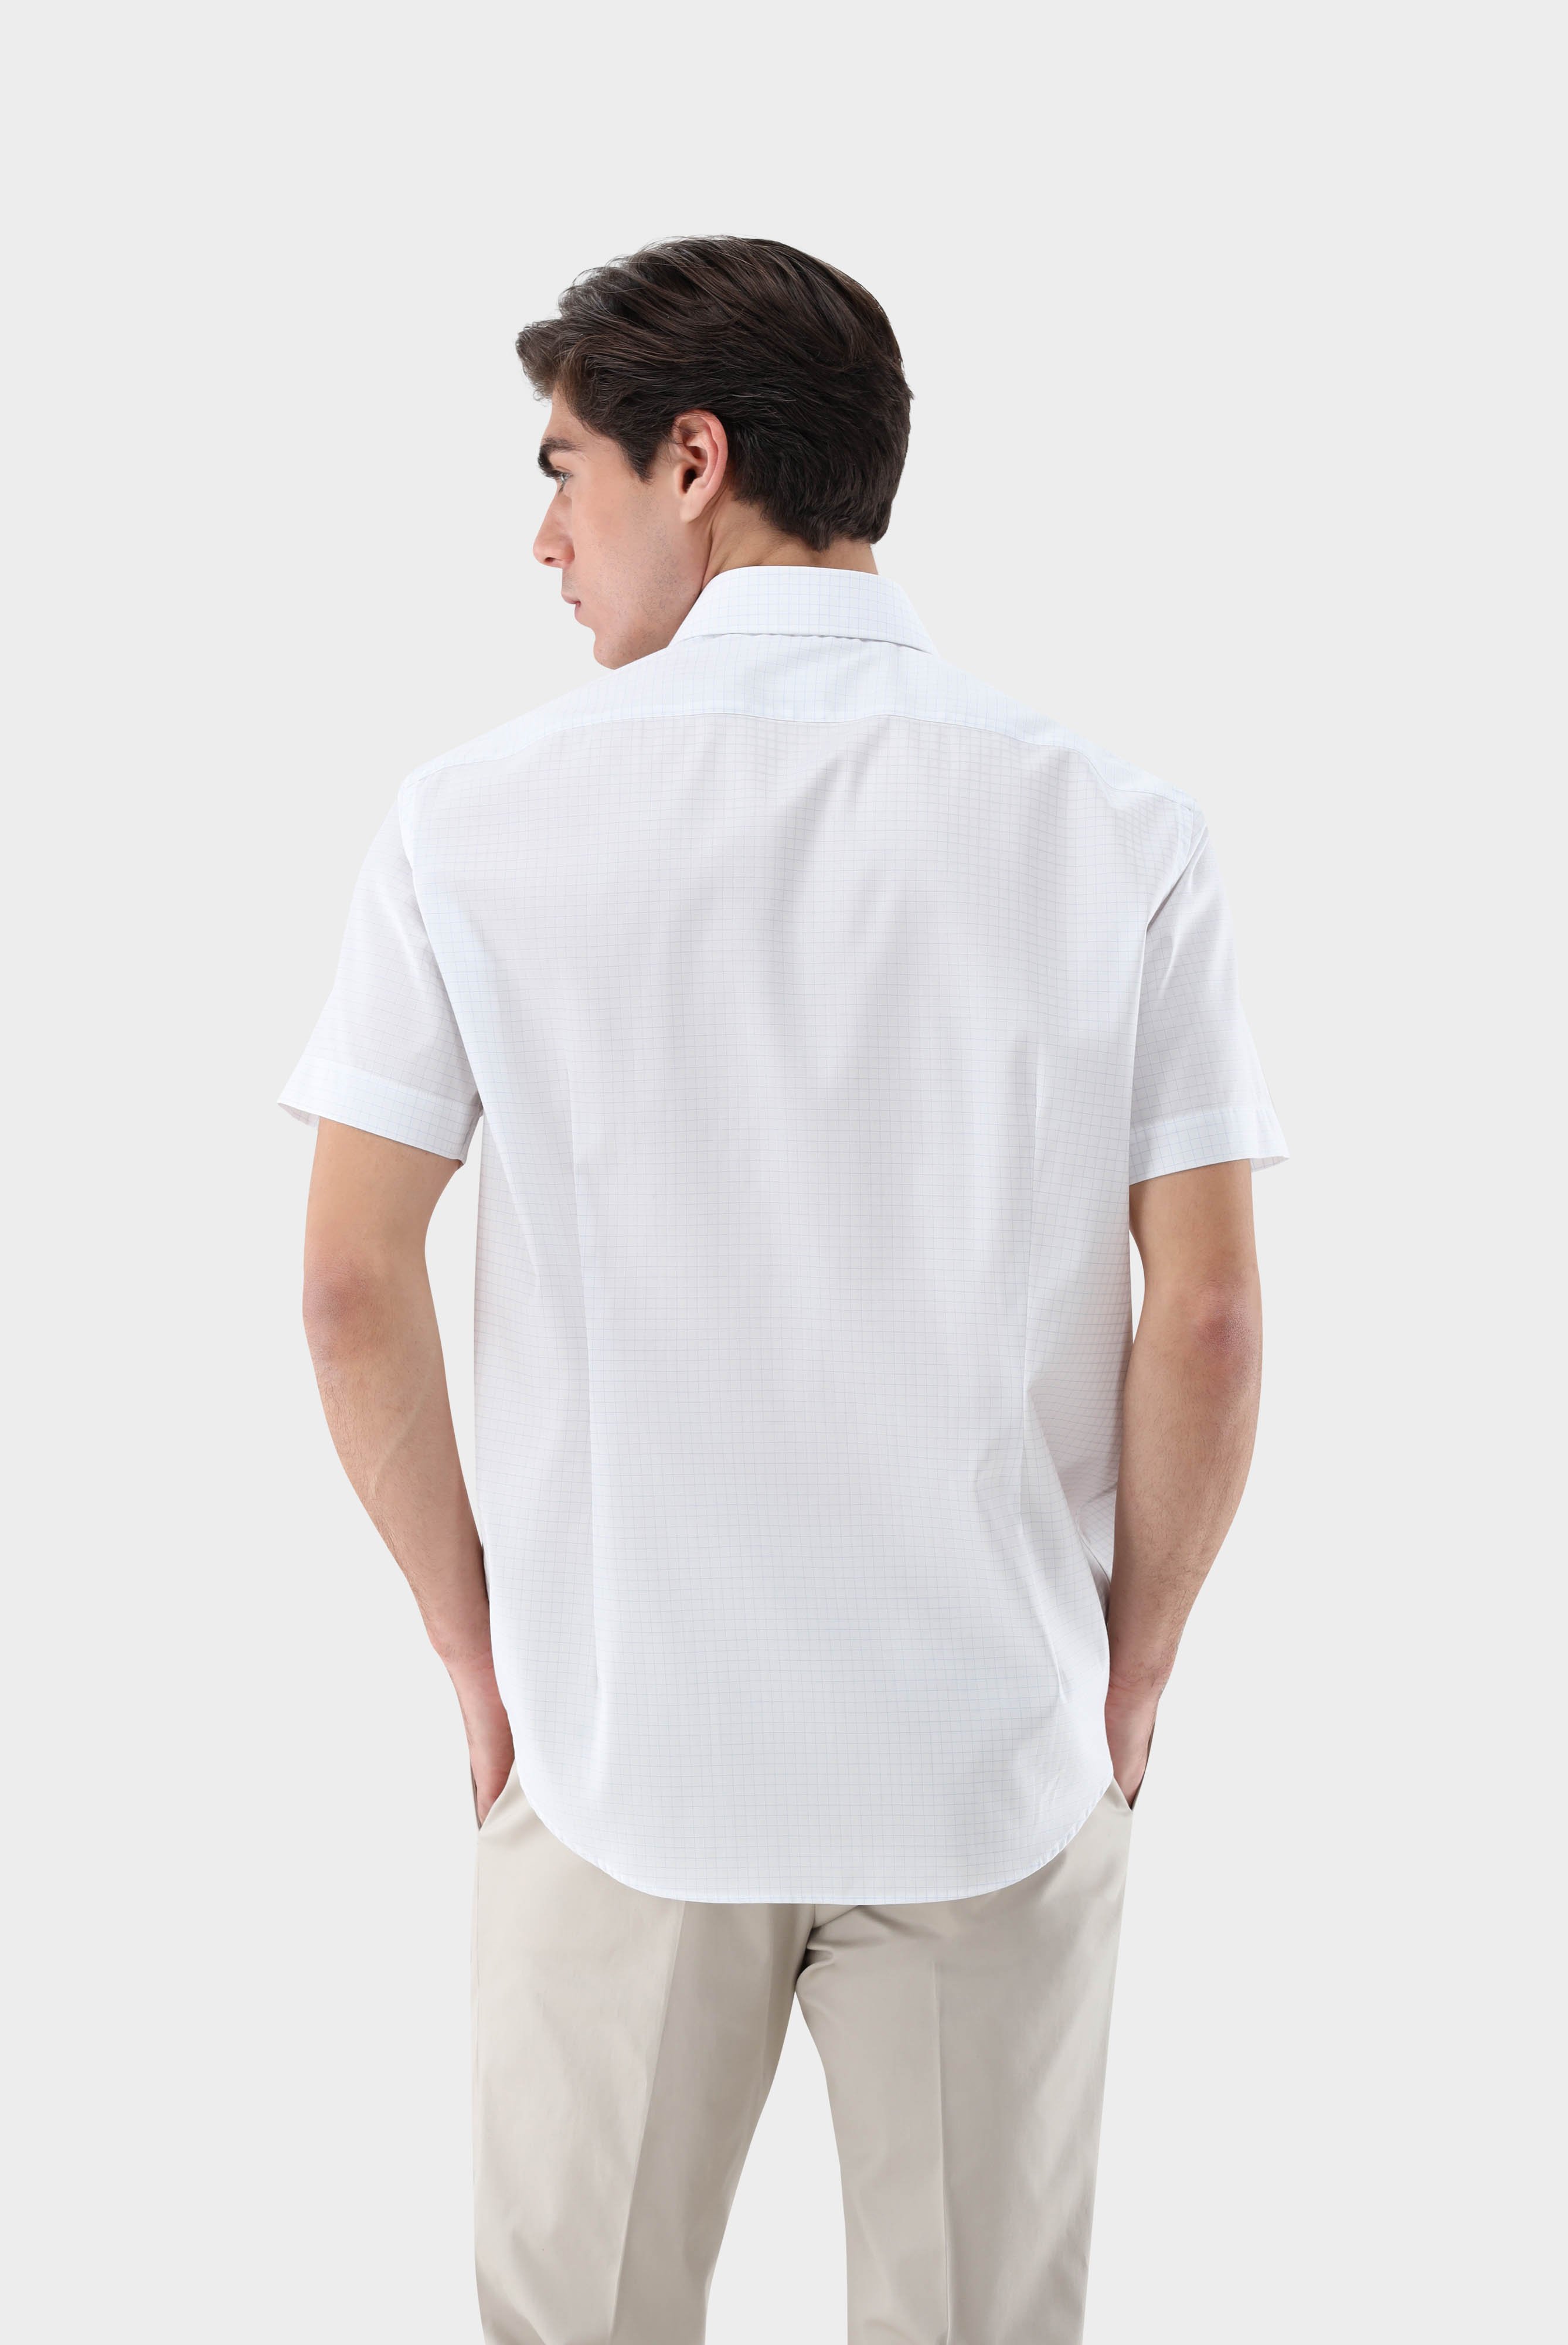 Casual Shirts+Wrinkle free checked Short-Sleeve Shirt+20.2048.QM.161105.007.38